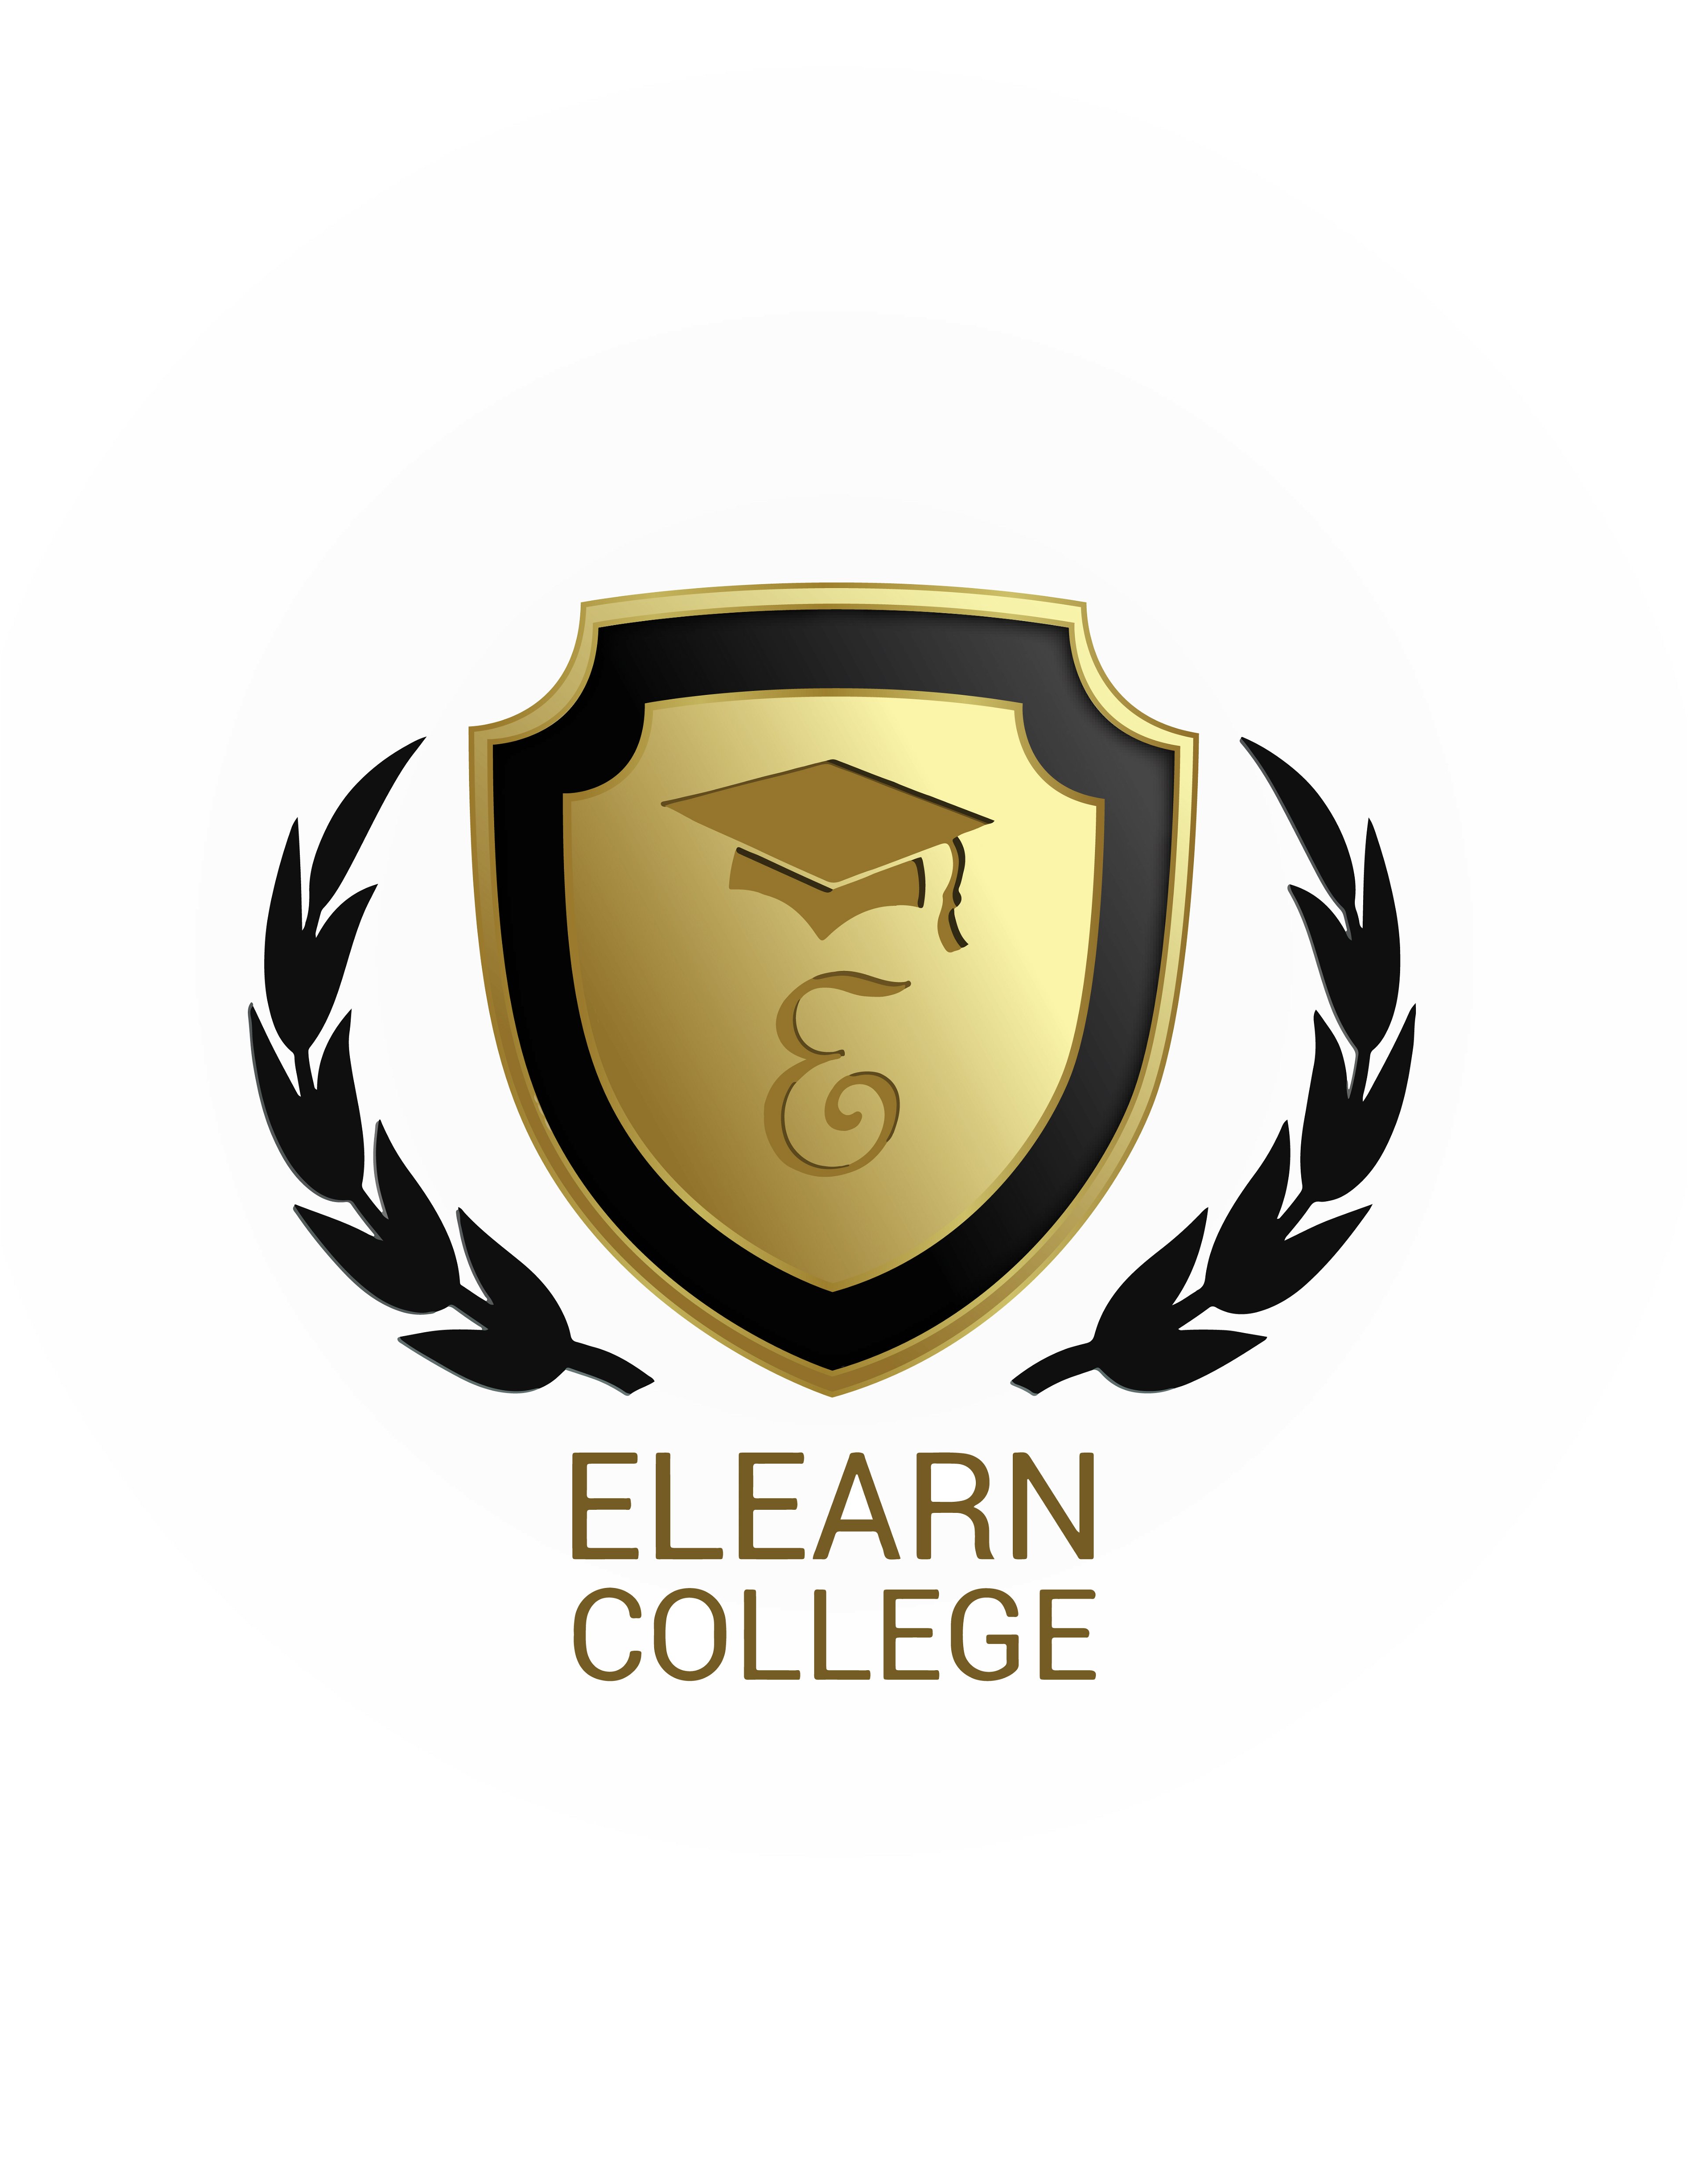 Elearncollege logo